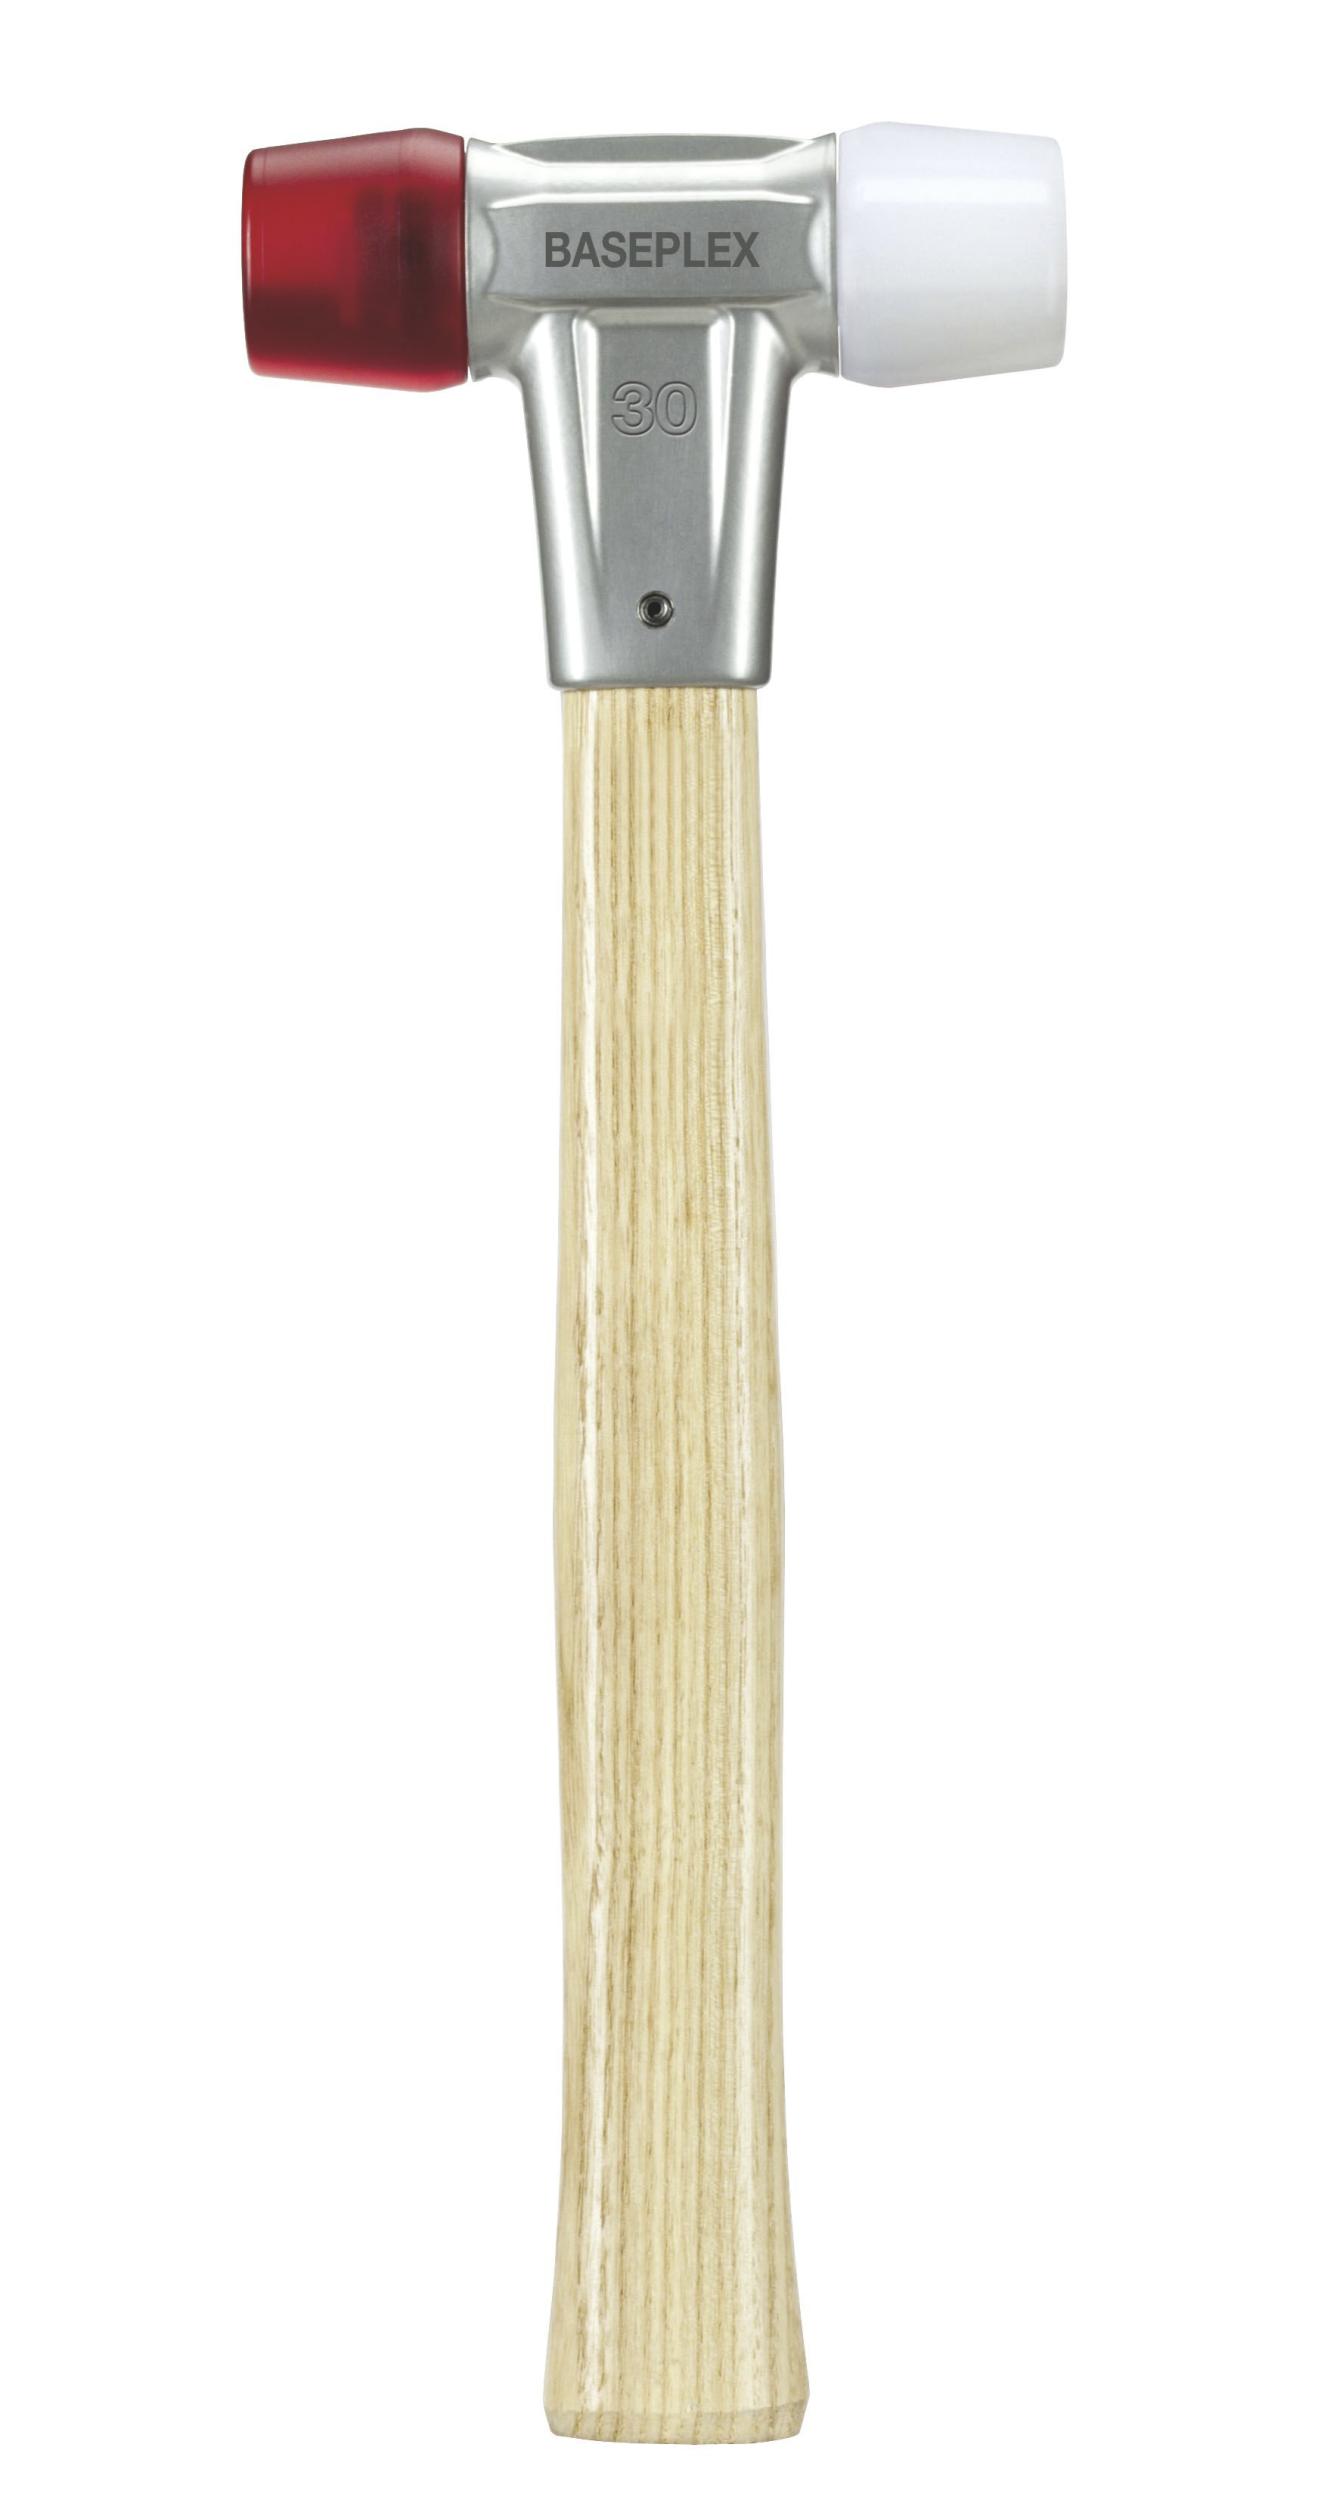 Halder Schonhammer 40 mm, ca. 630 g, Gesamtlänge 325 mm, Kopflänge 107 mm